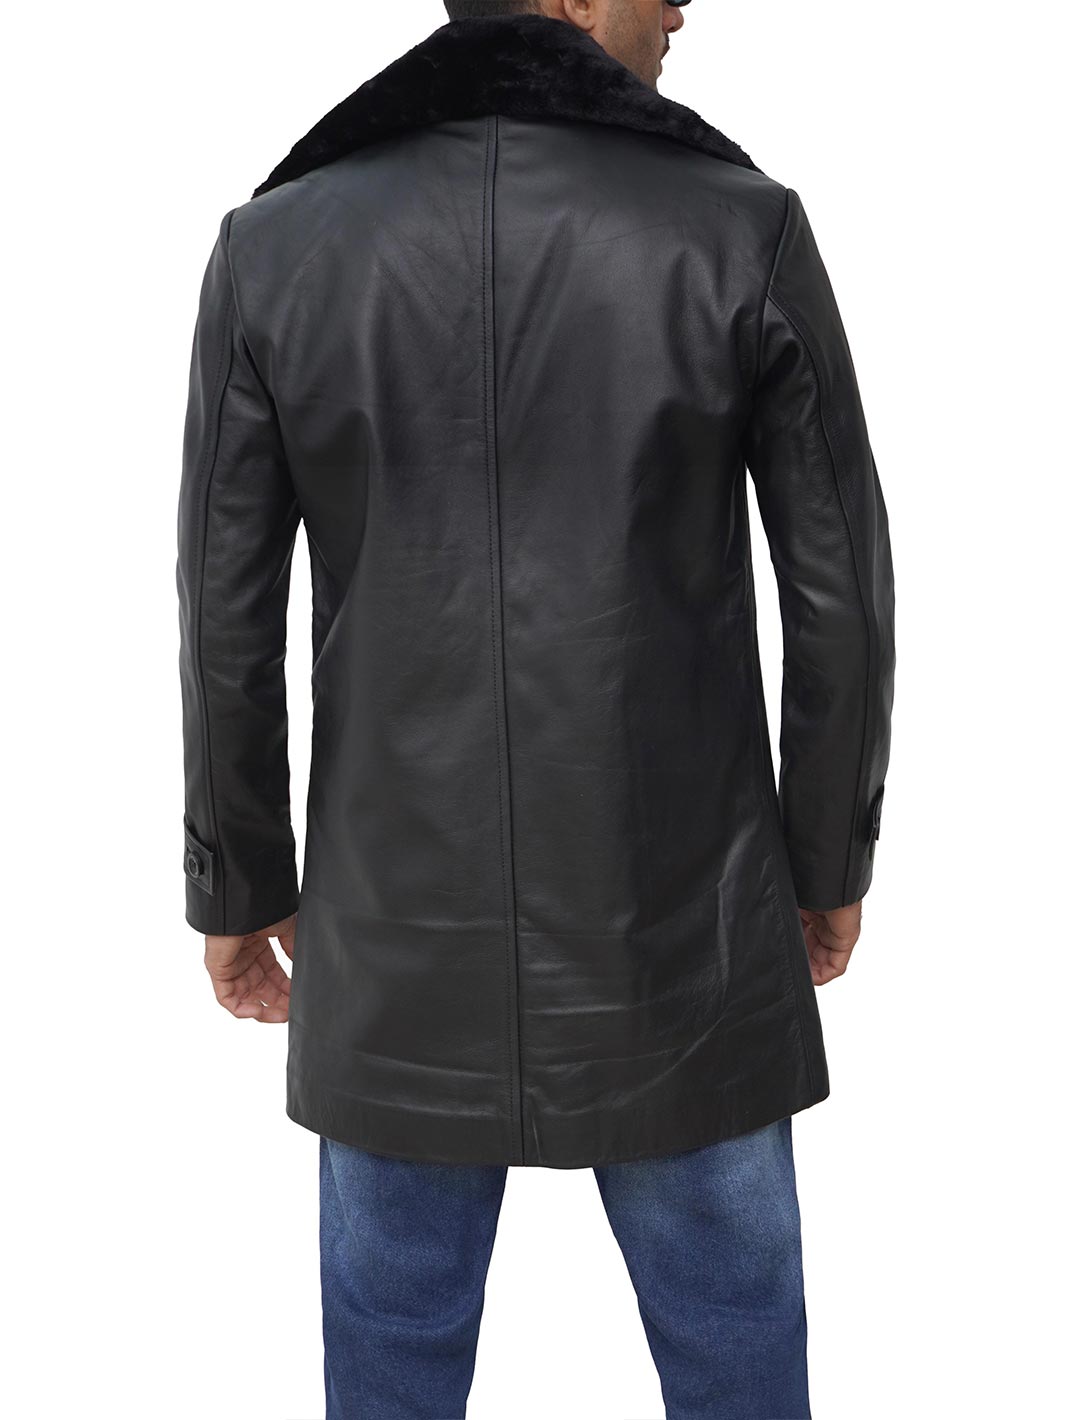 Mens Car leather coat